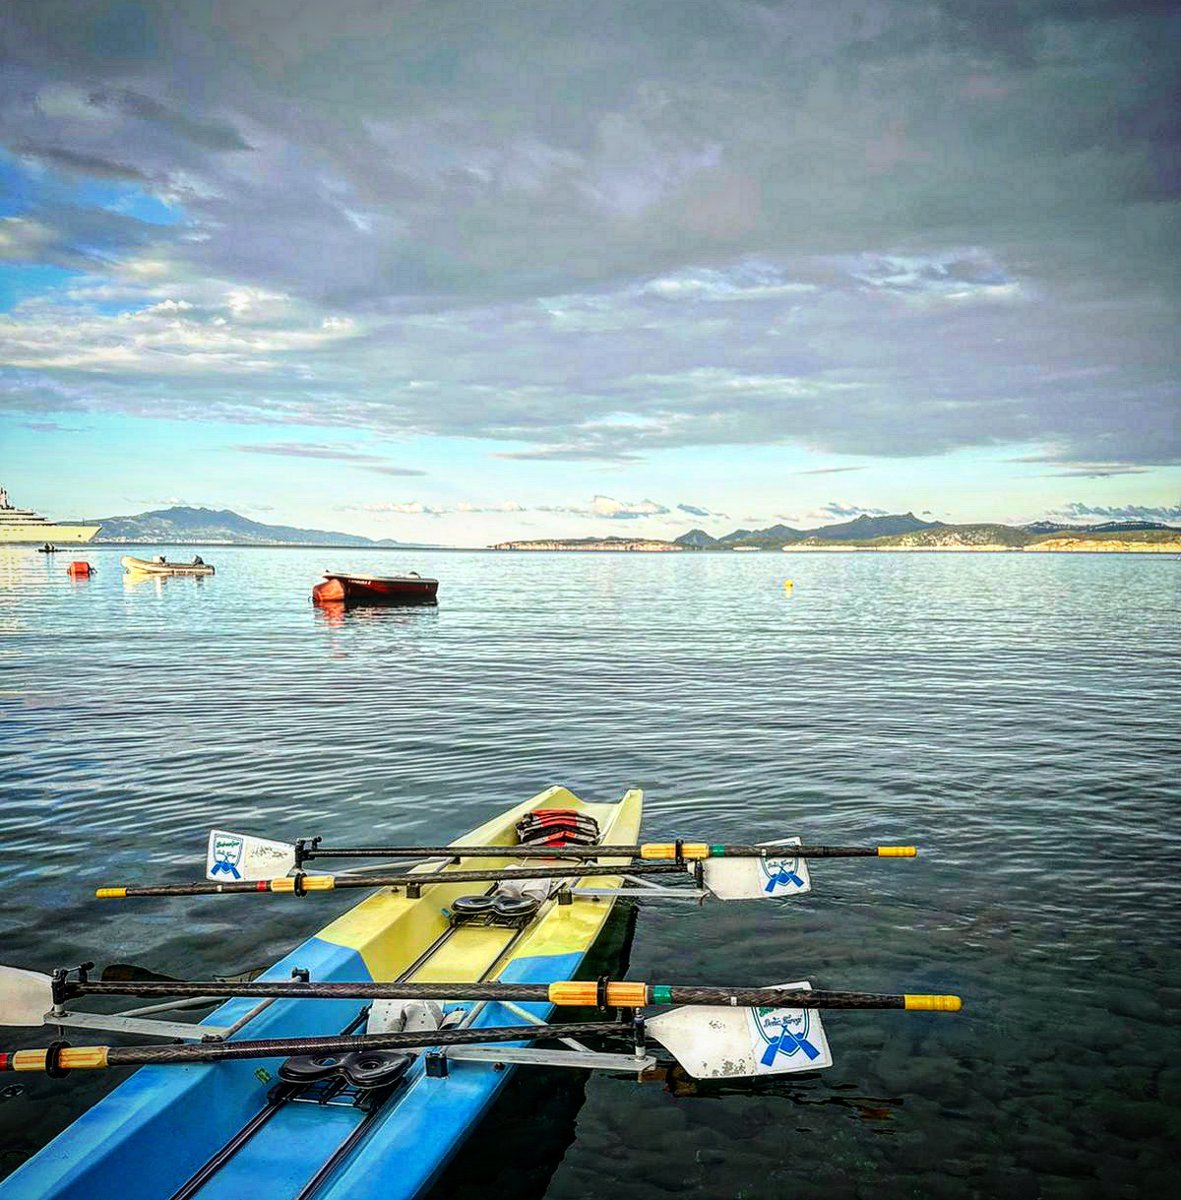 Don't know where I'm going I just keep on rowing #bodrumrowingclub #bodrum #bodrumrowing #rowing #row #coastalrowing #kürek #rowingmotivation #rower #rowingturkey #rowingbodrum #rowinglife #generationrowing #denizküreği #rowingclub #rowingpassion #rowingbible #spor